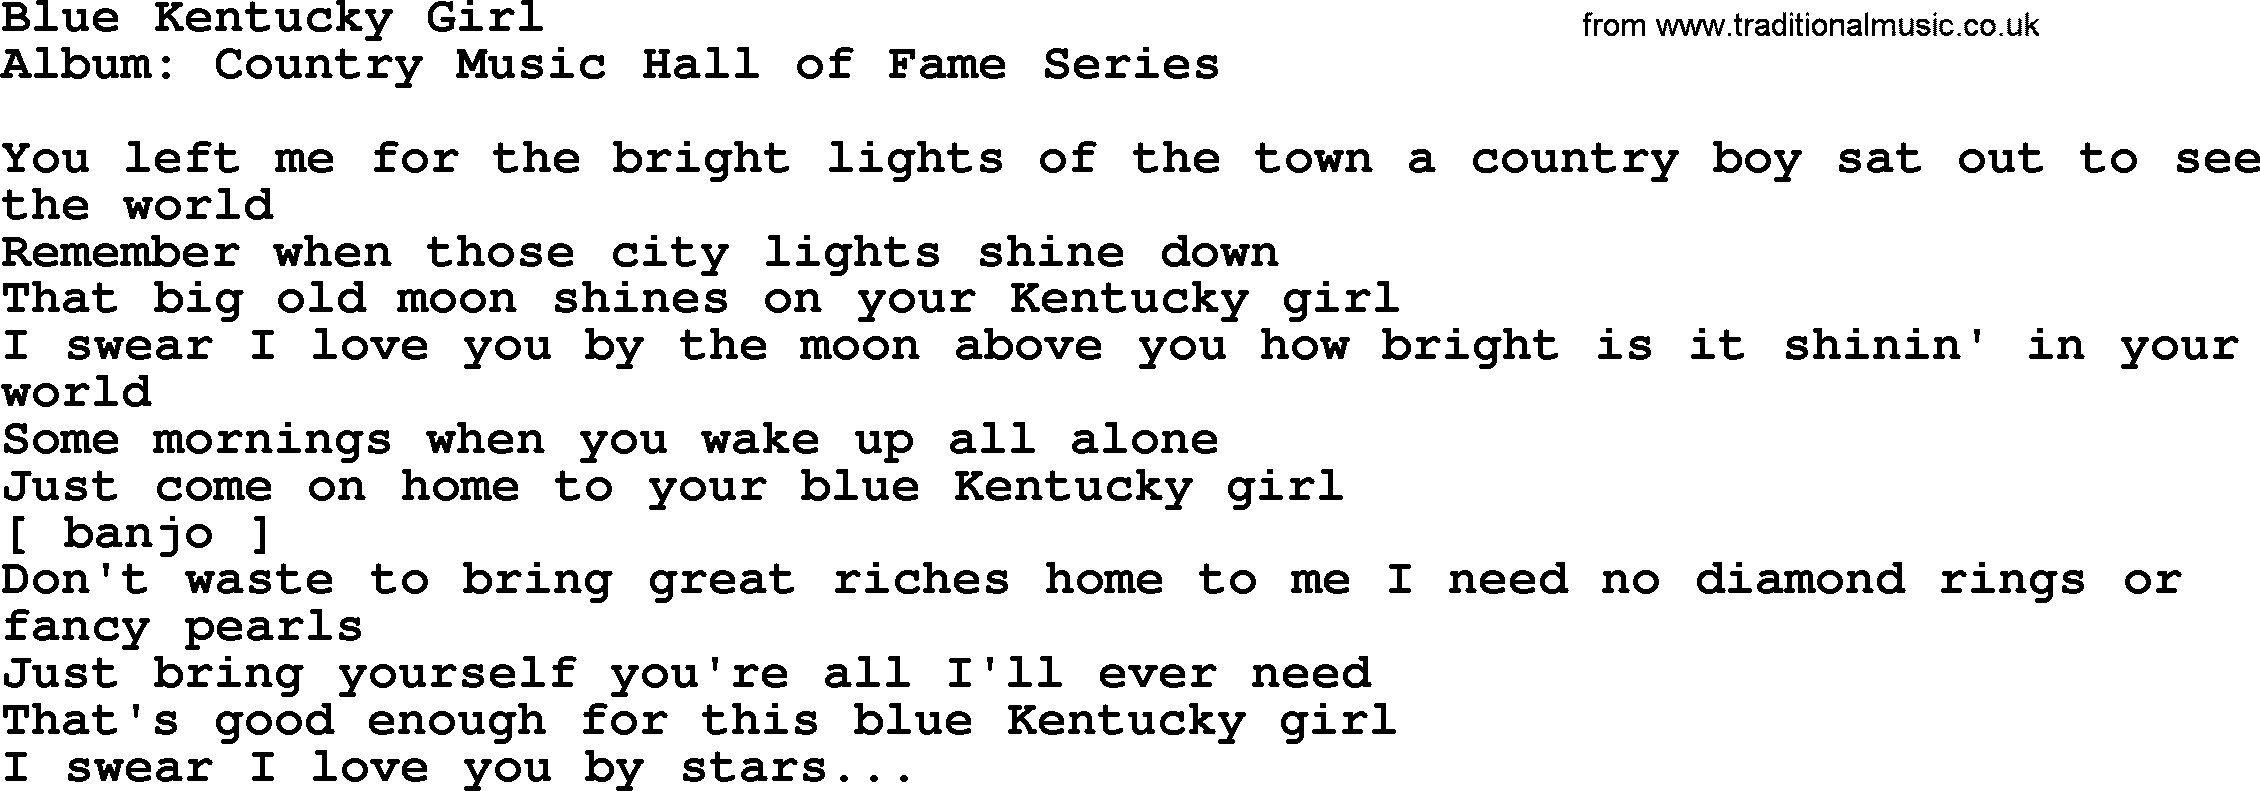 Loretta Lynn song: Blue Kentucky Girl lyrics